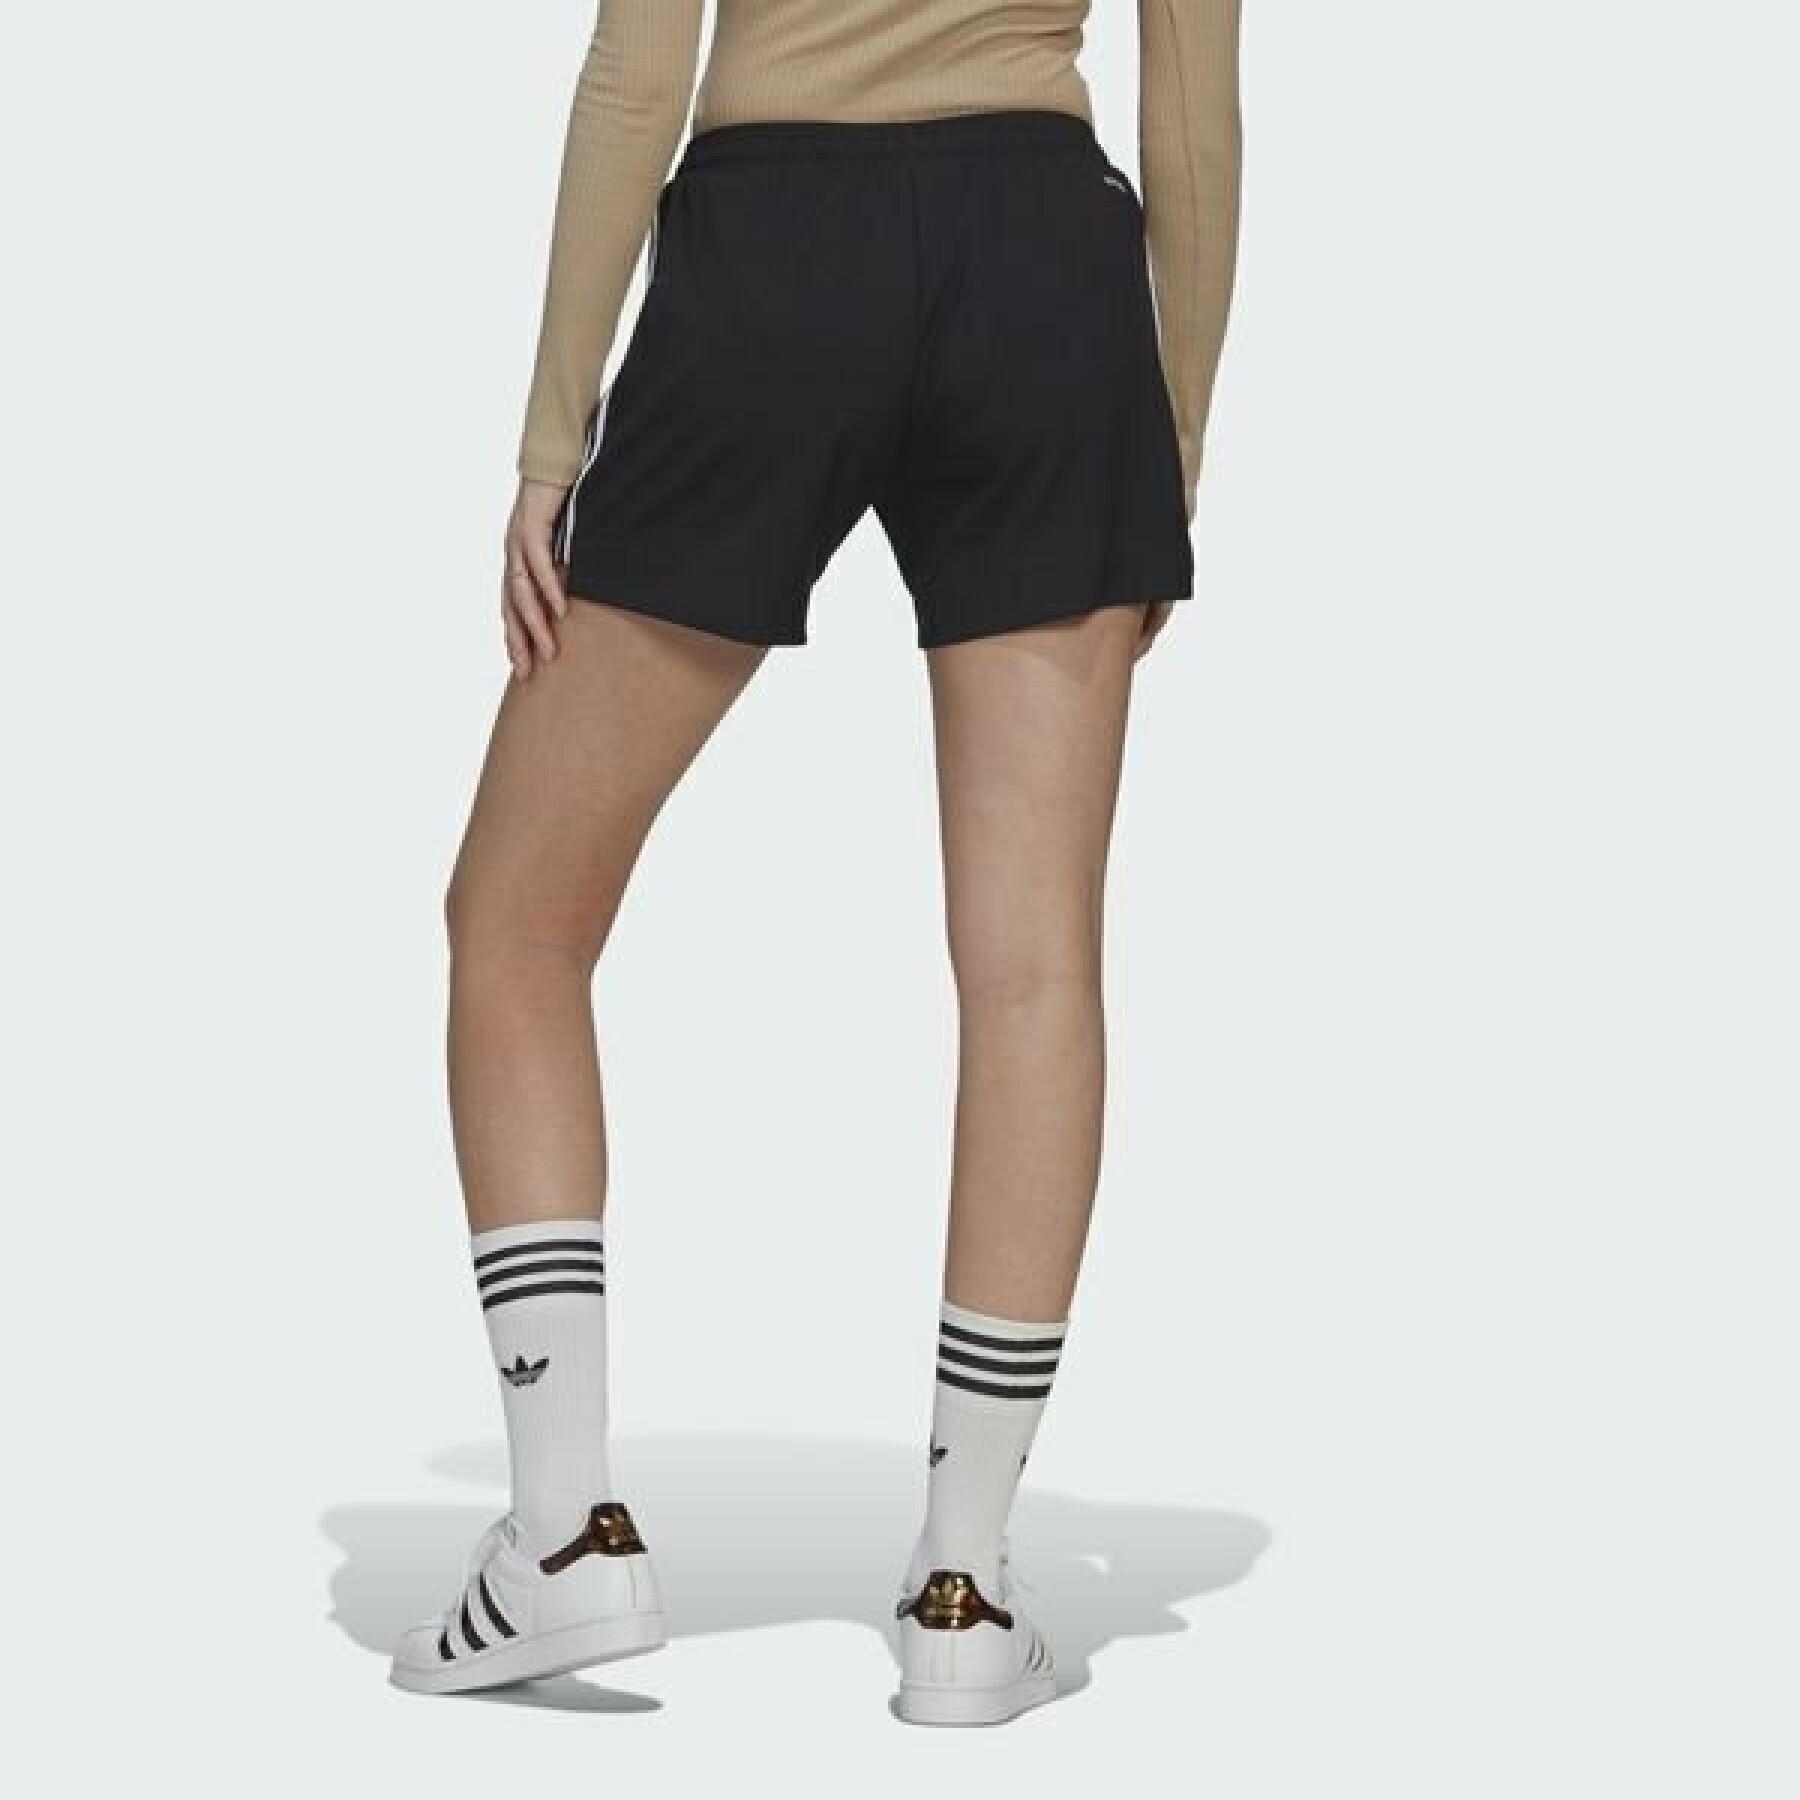 Pantalones cortos de mujer Alemania Euro femenino 2022